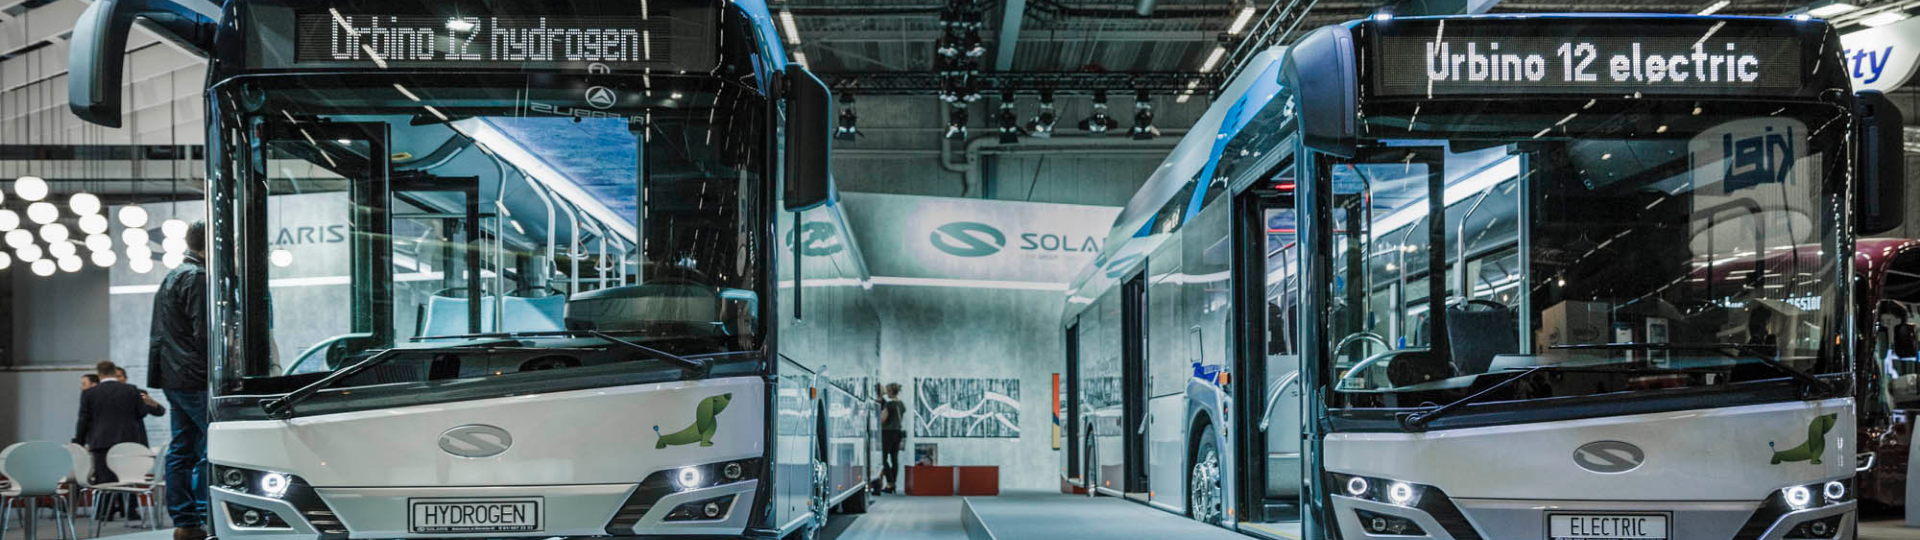 UITP Global Public Transport Summit 2019:  World premiere of Solaris Urbino 12 hydrogen